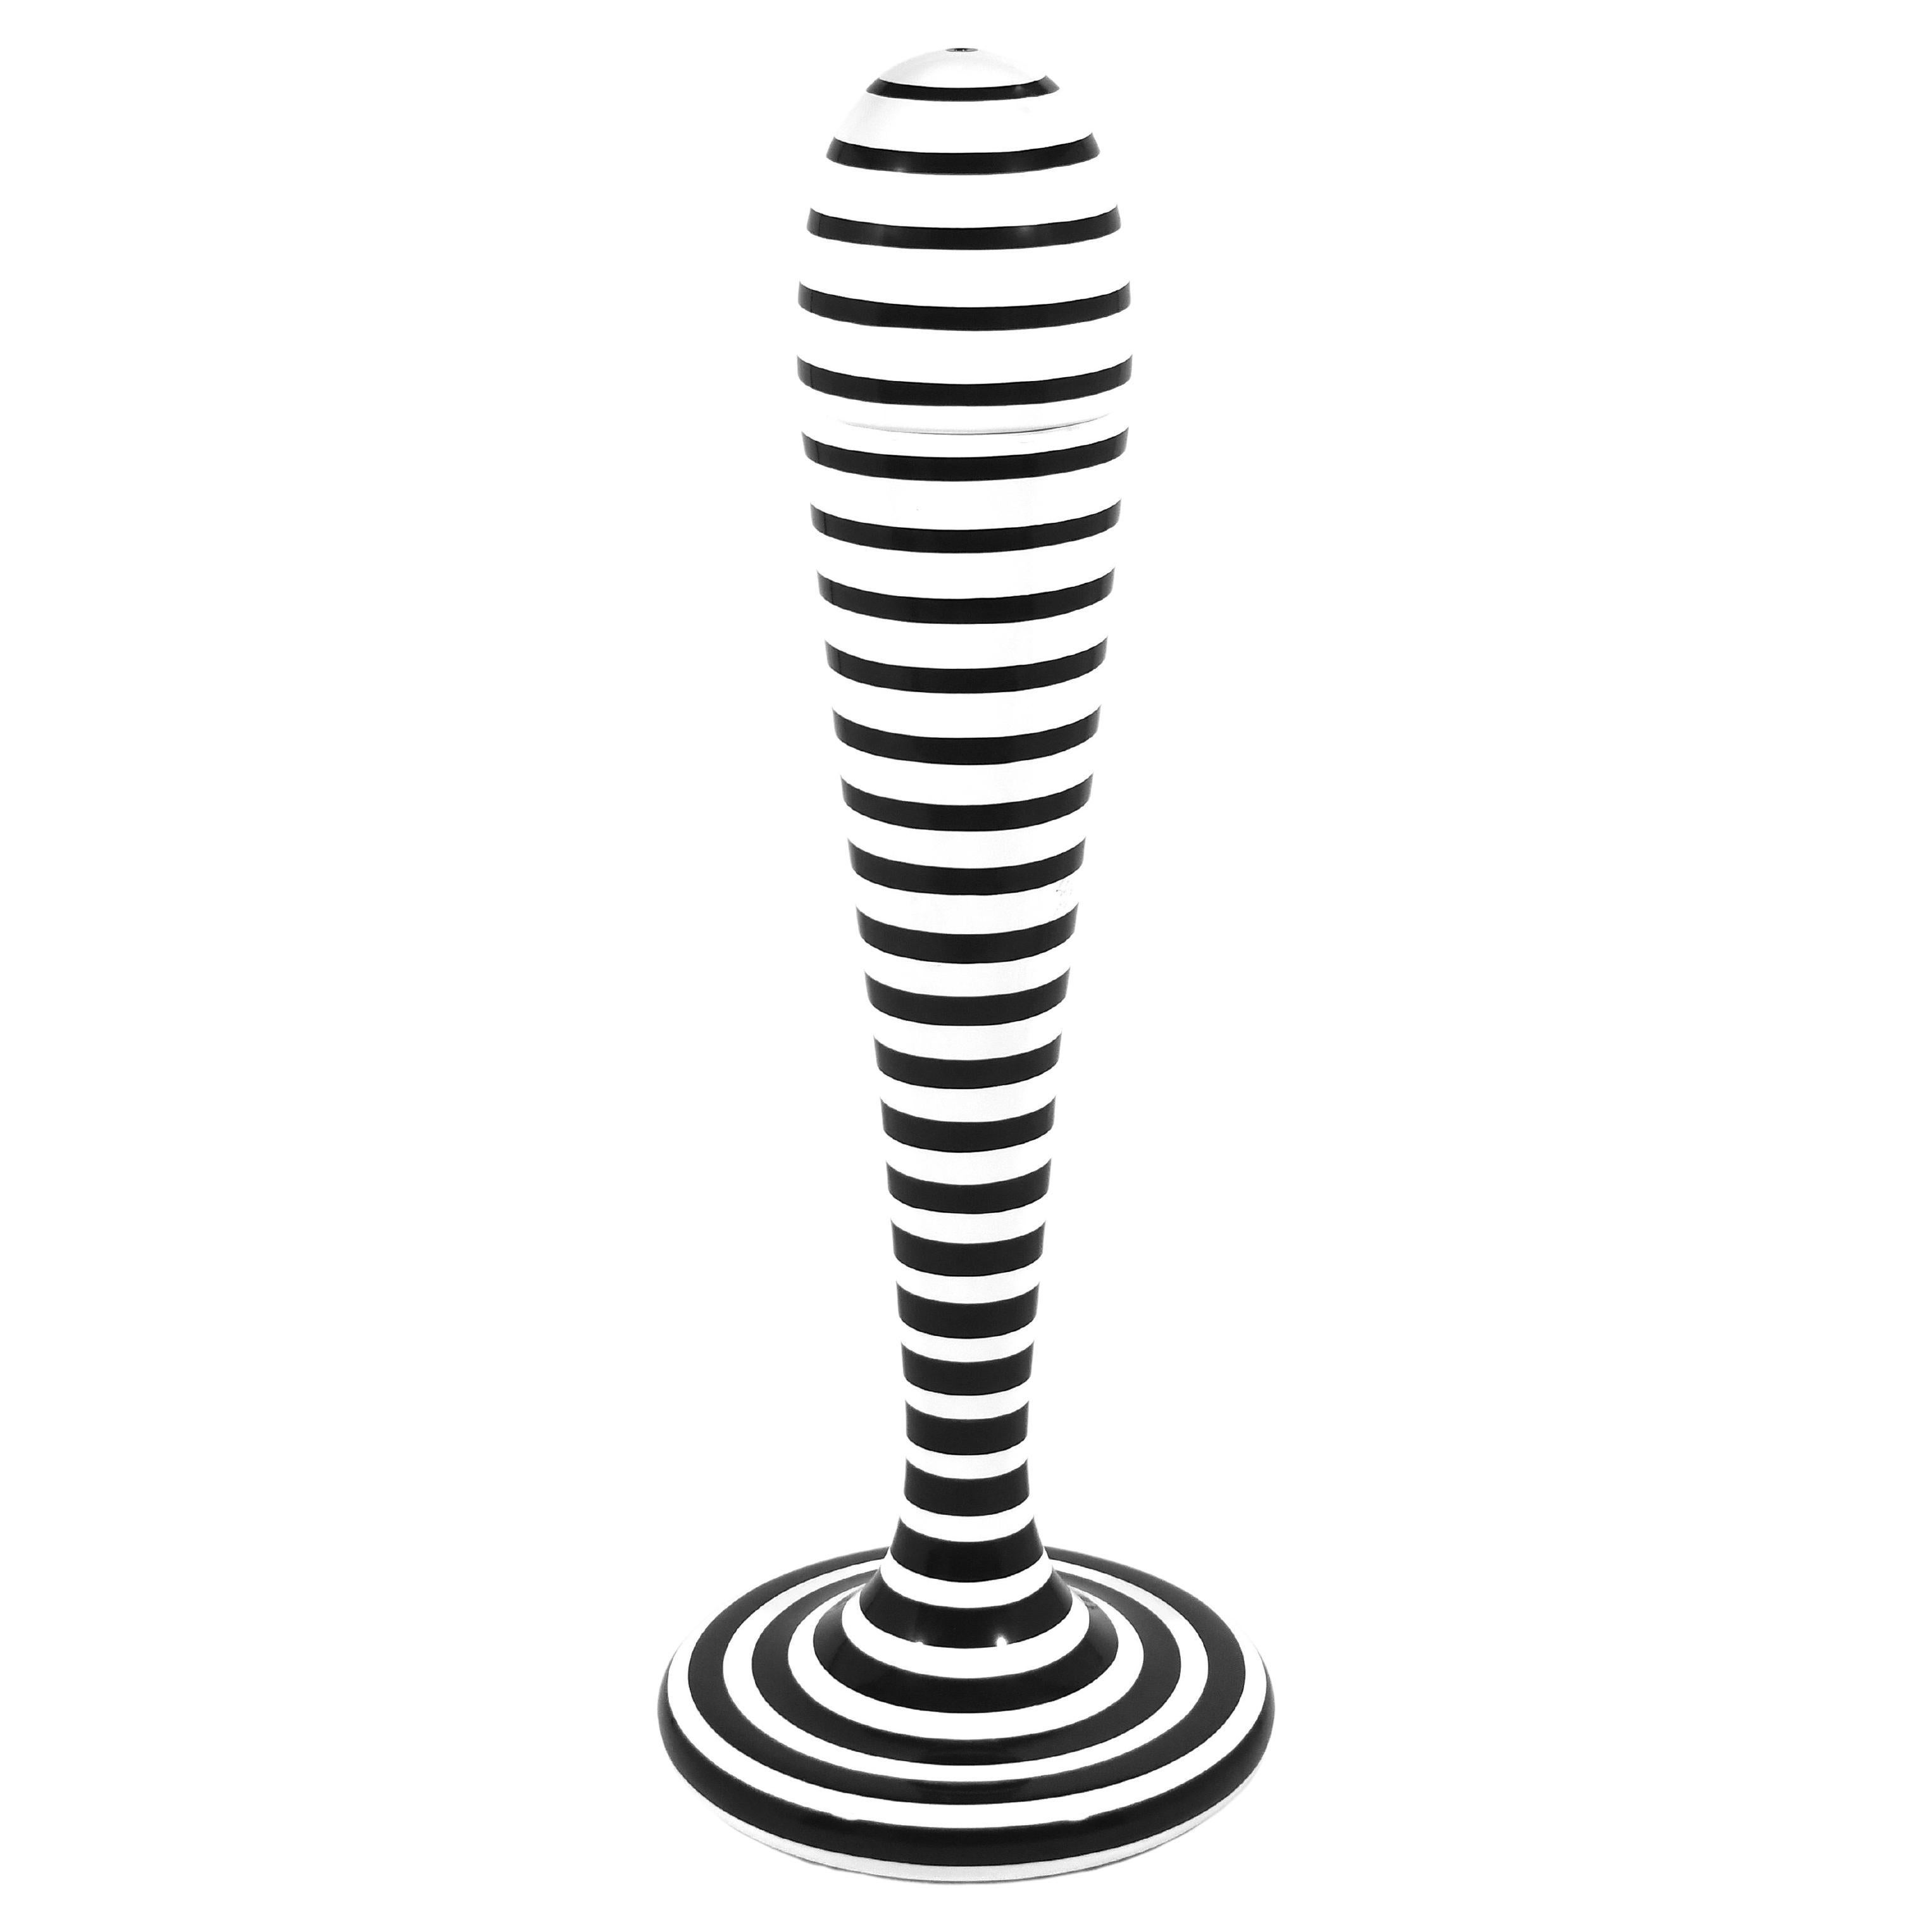 Seltene Guido Venturini „Lingam“ Vase/Skulptur von Alessi, selten